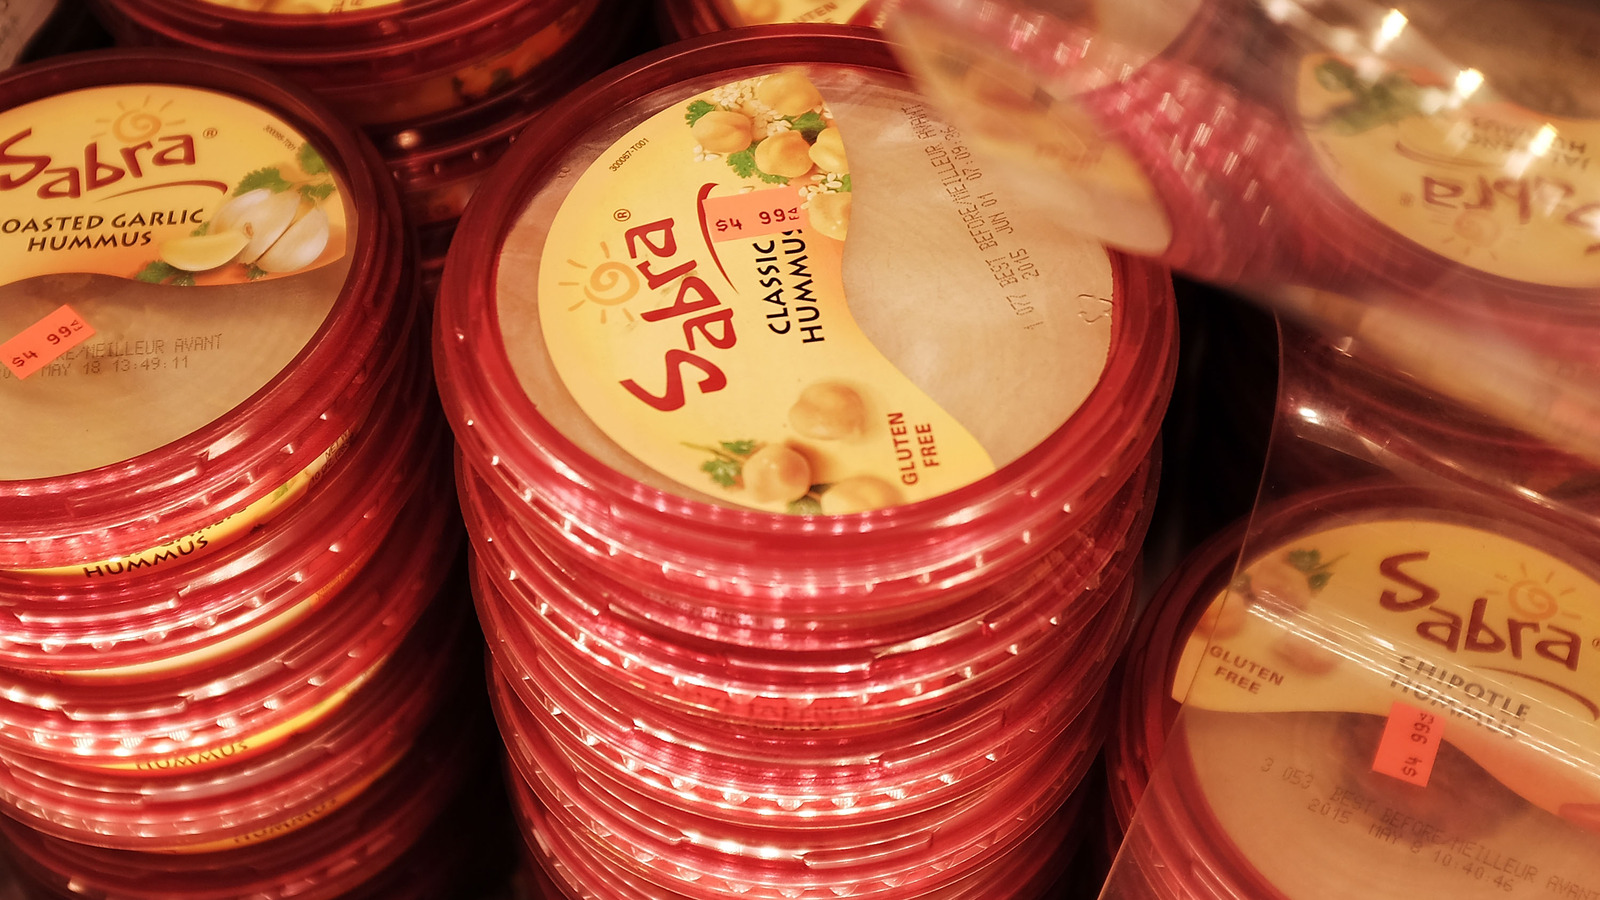 14 Best StoreBought Hummus Brands Ranked